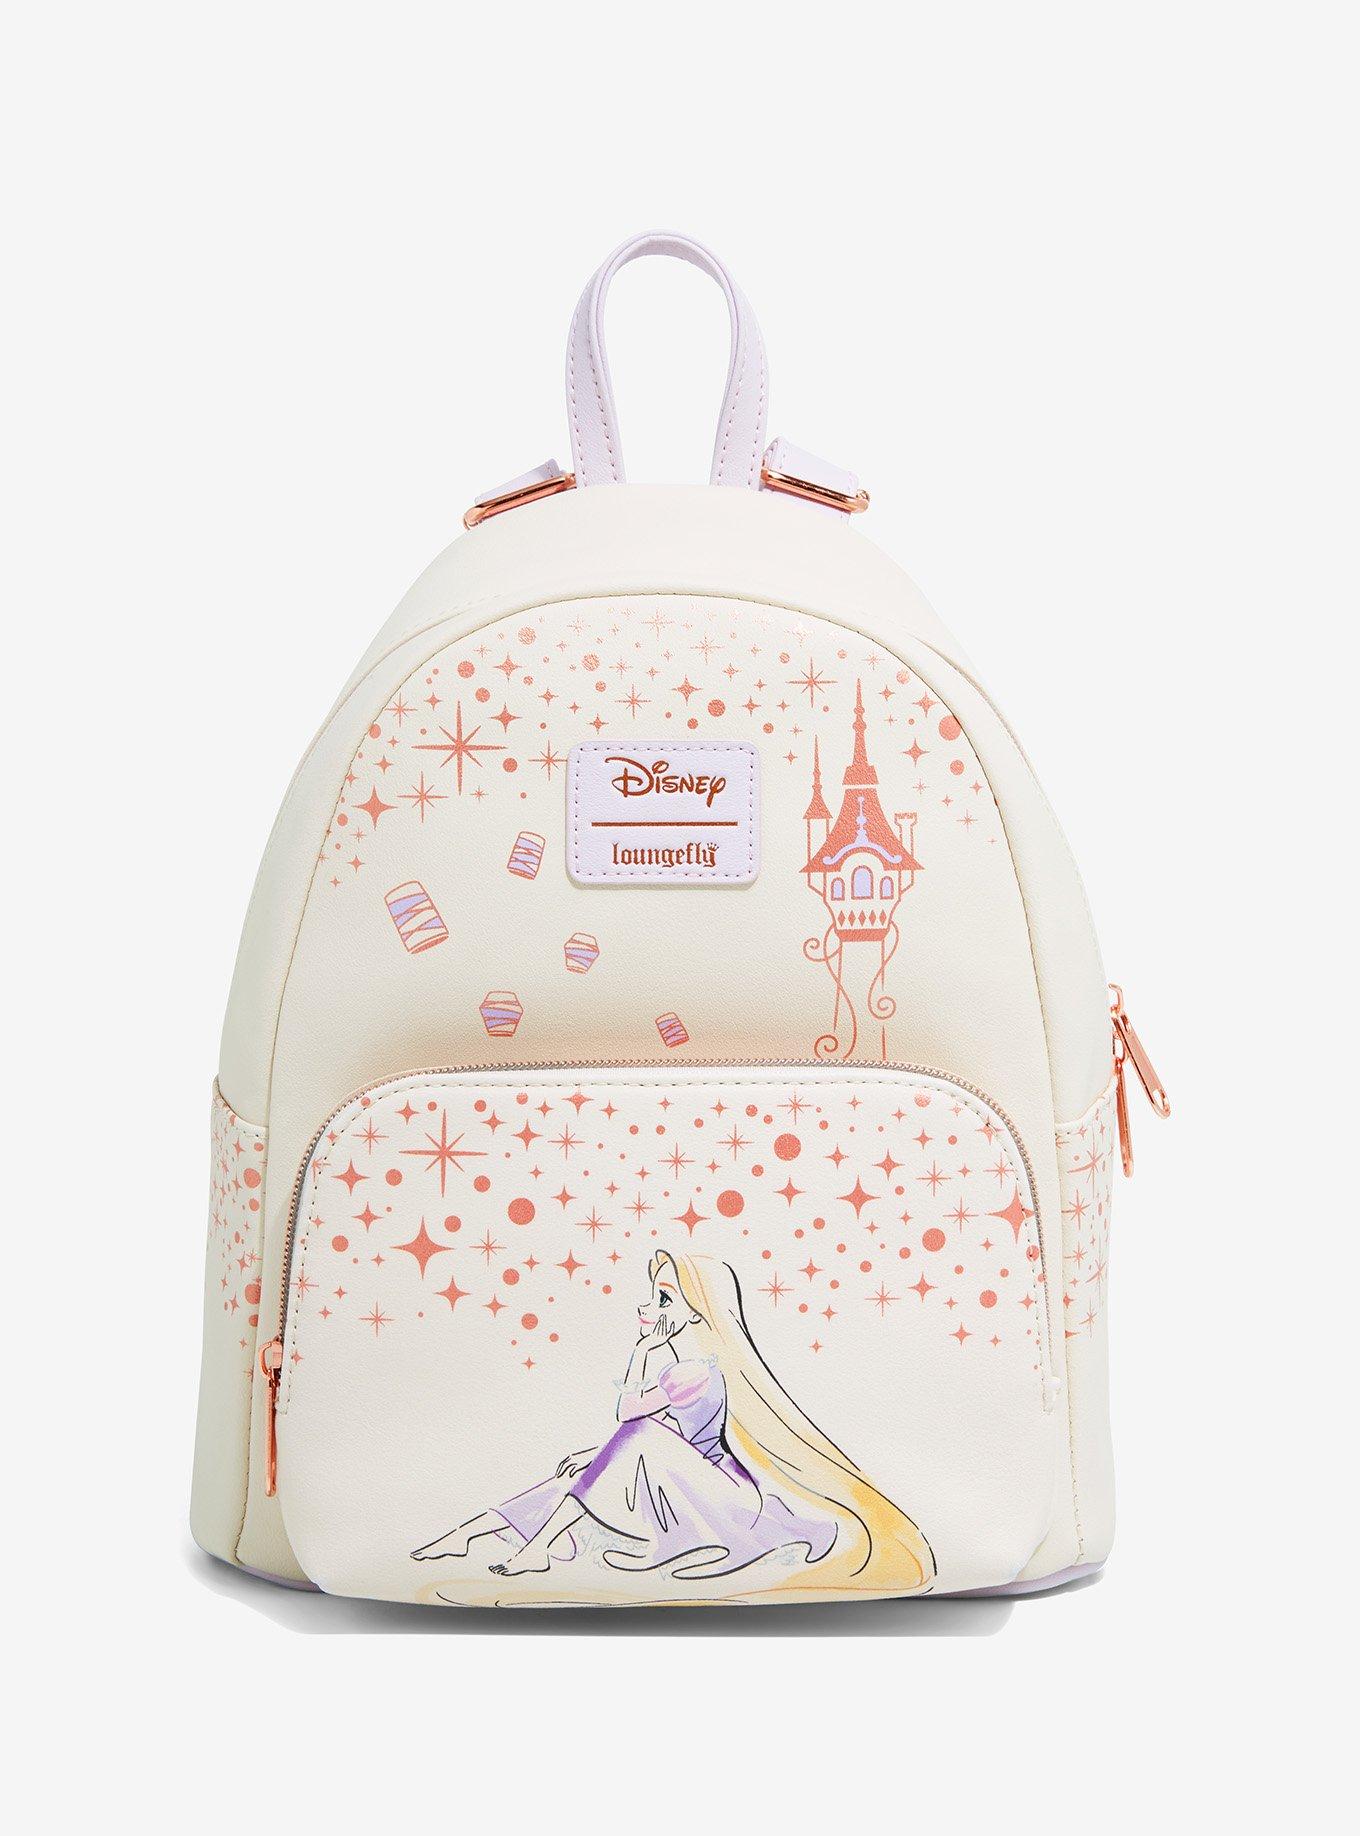 Loungefly Disney Tangled Princess Castle Mini Backpack